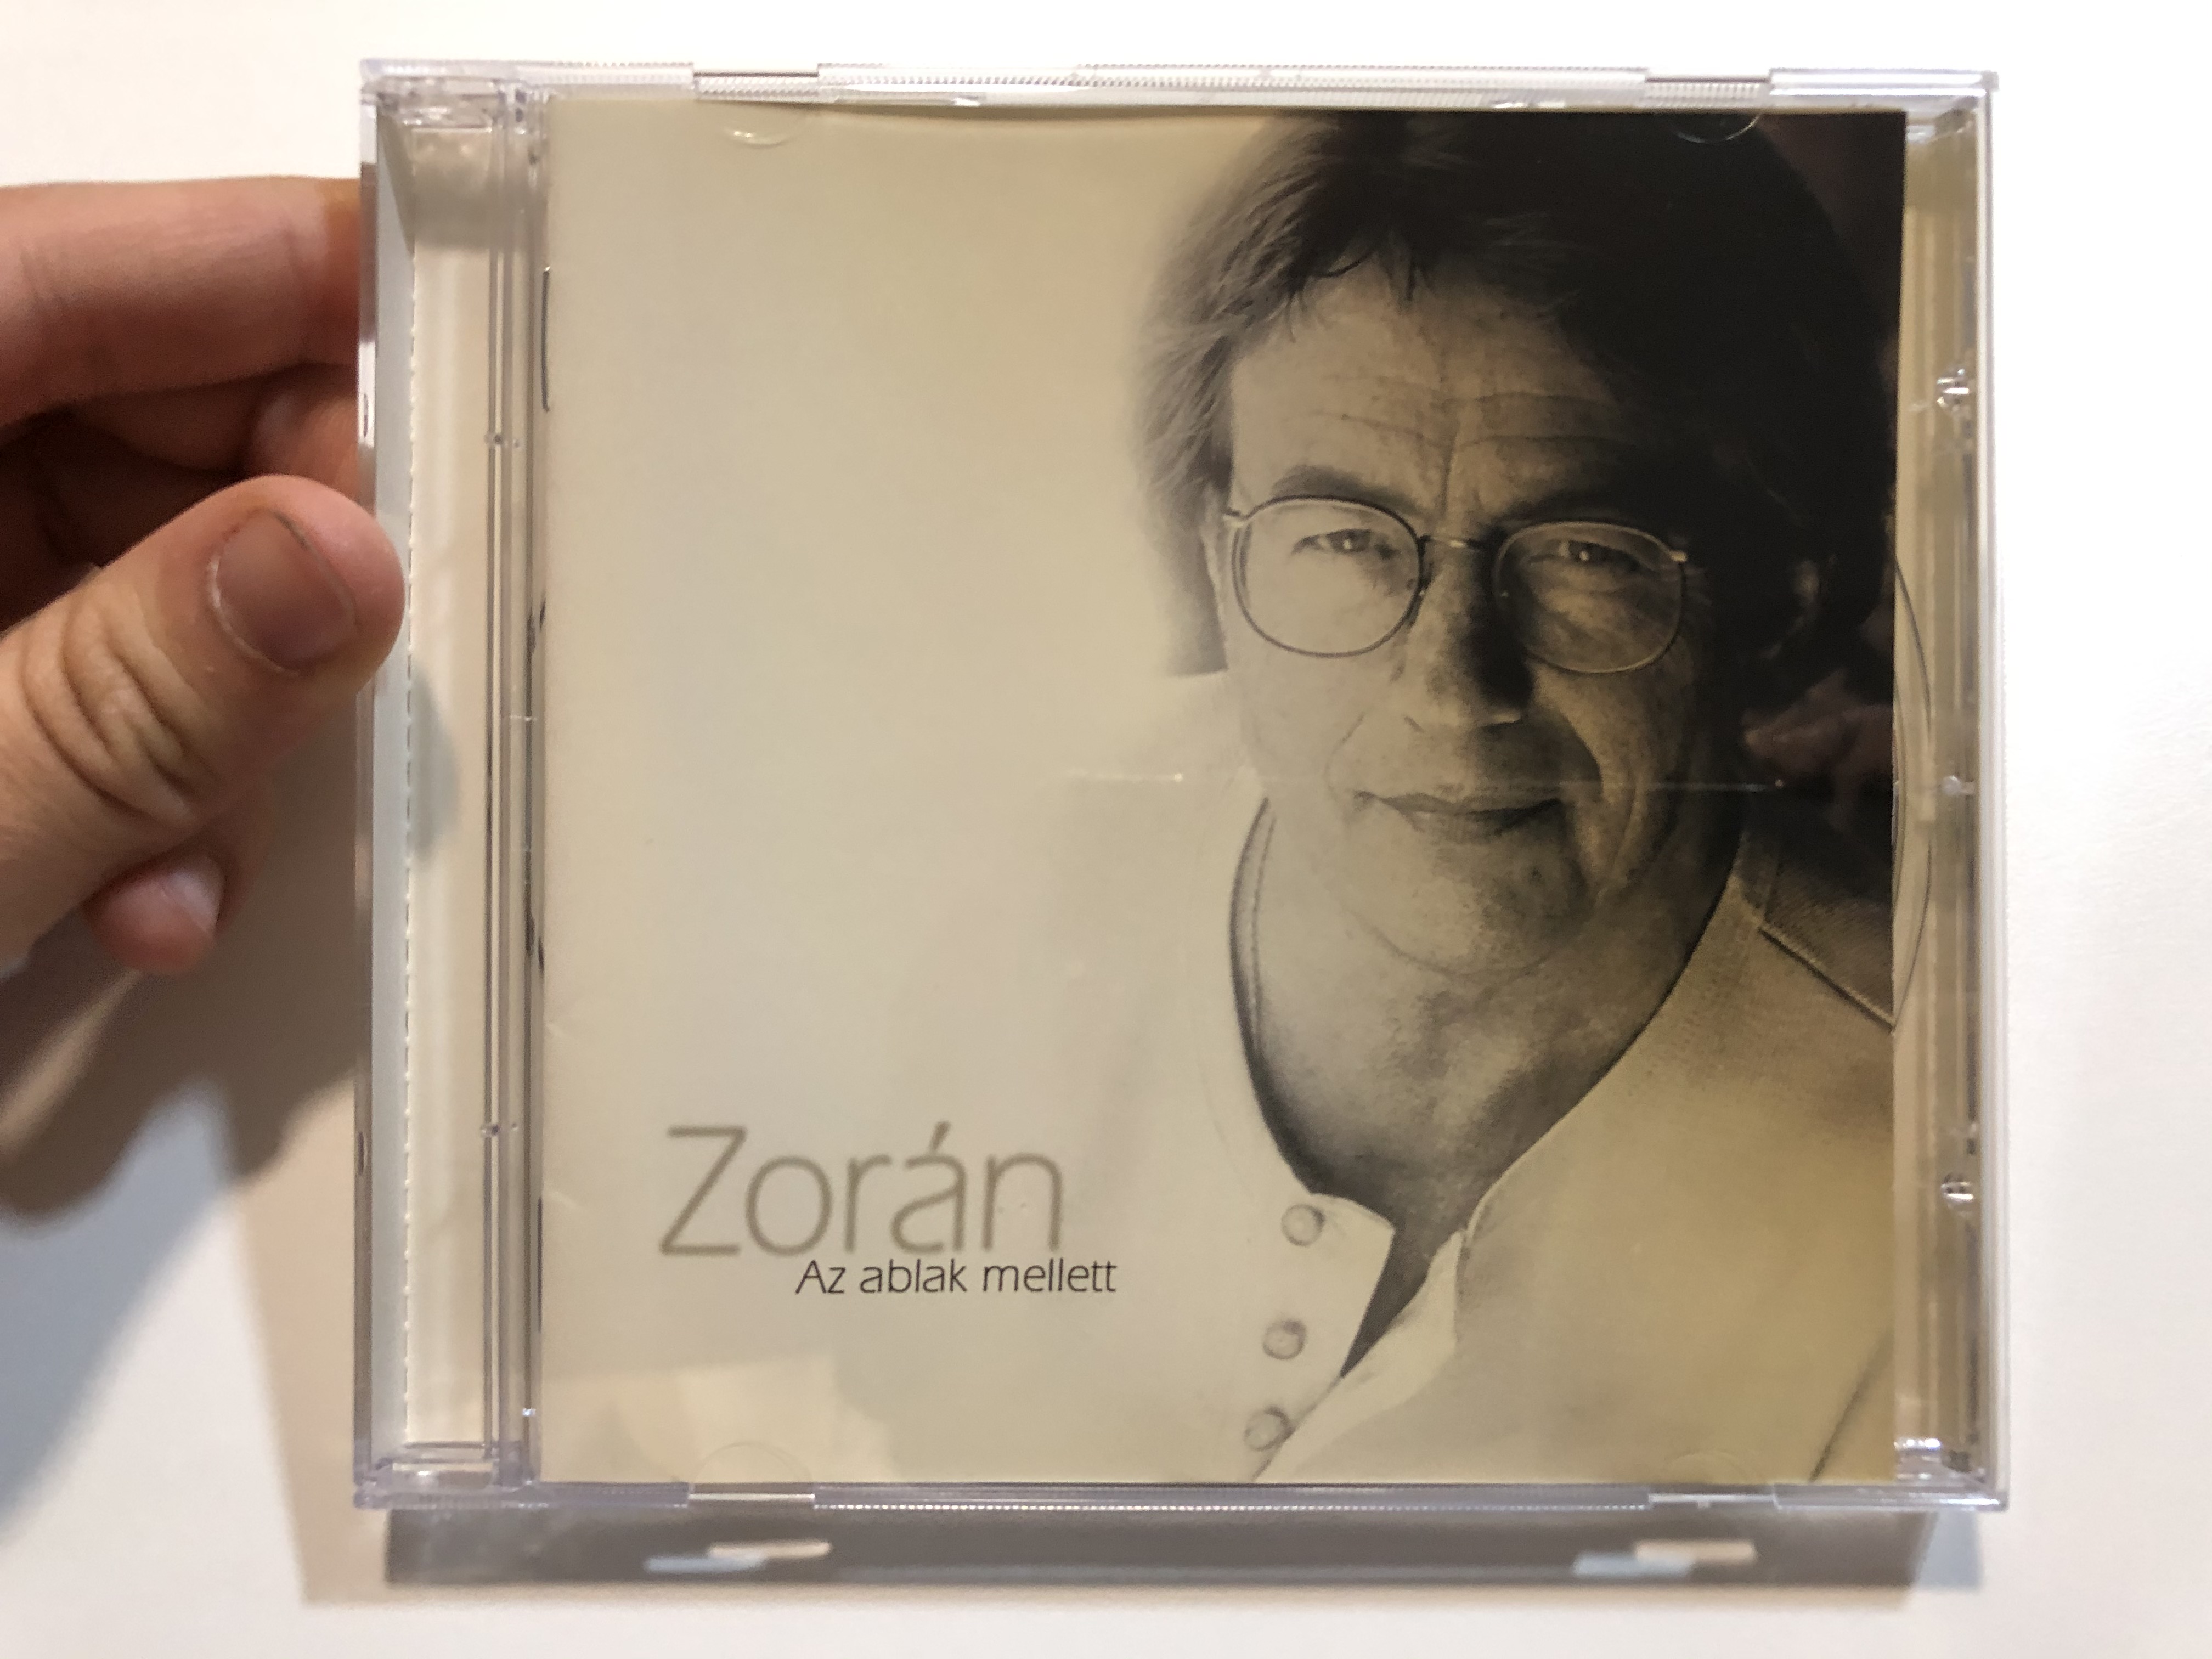 zor-n-az-ablak-mellett-universal-music-audio-cd-1999-543-194-2-1-.jpg